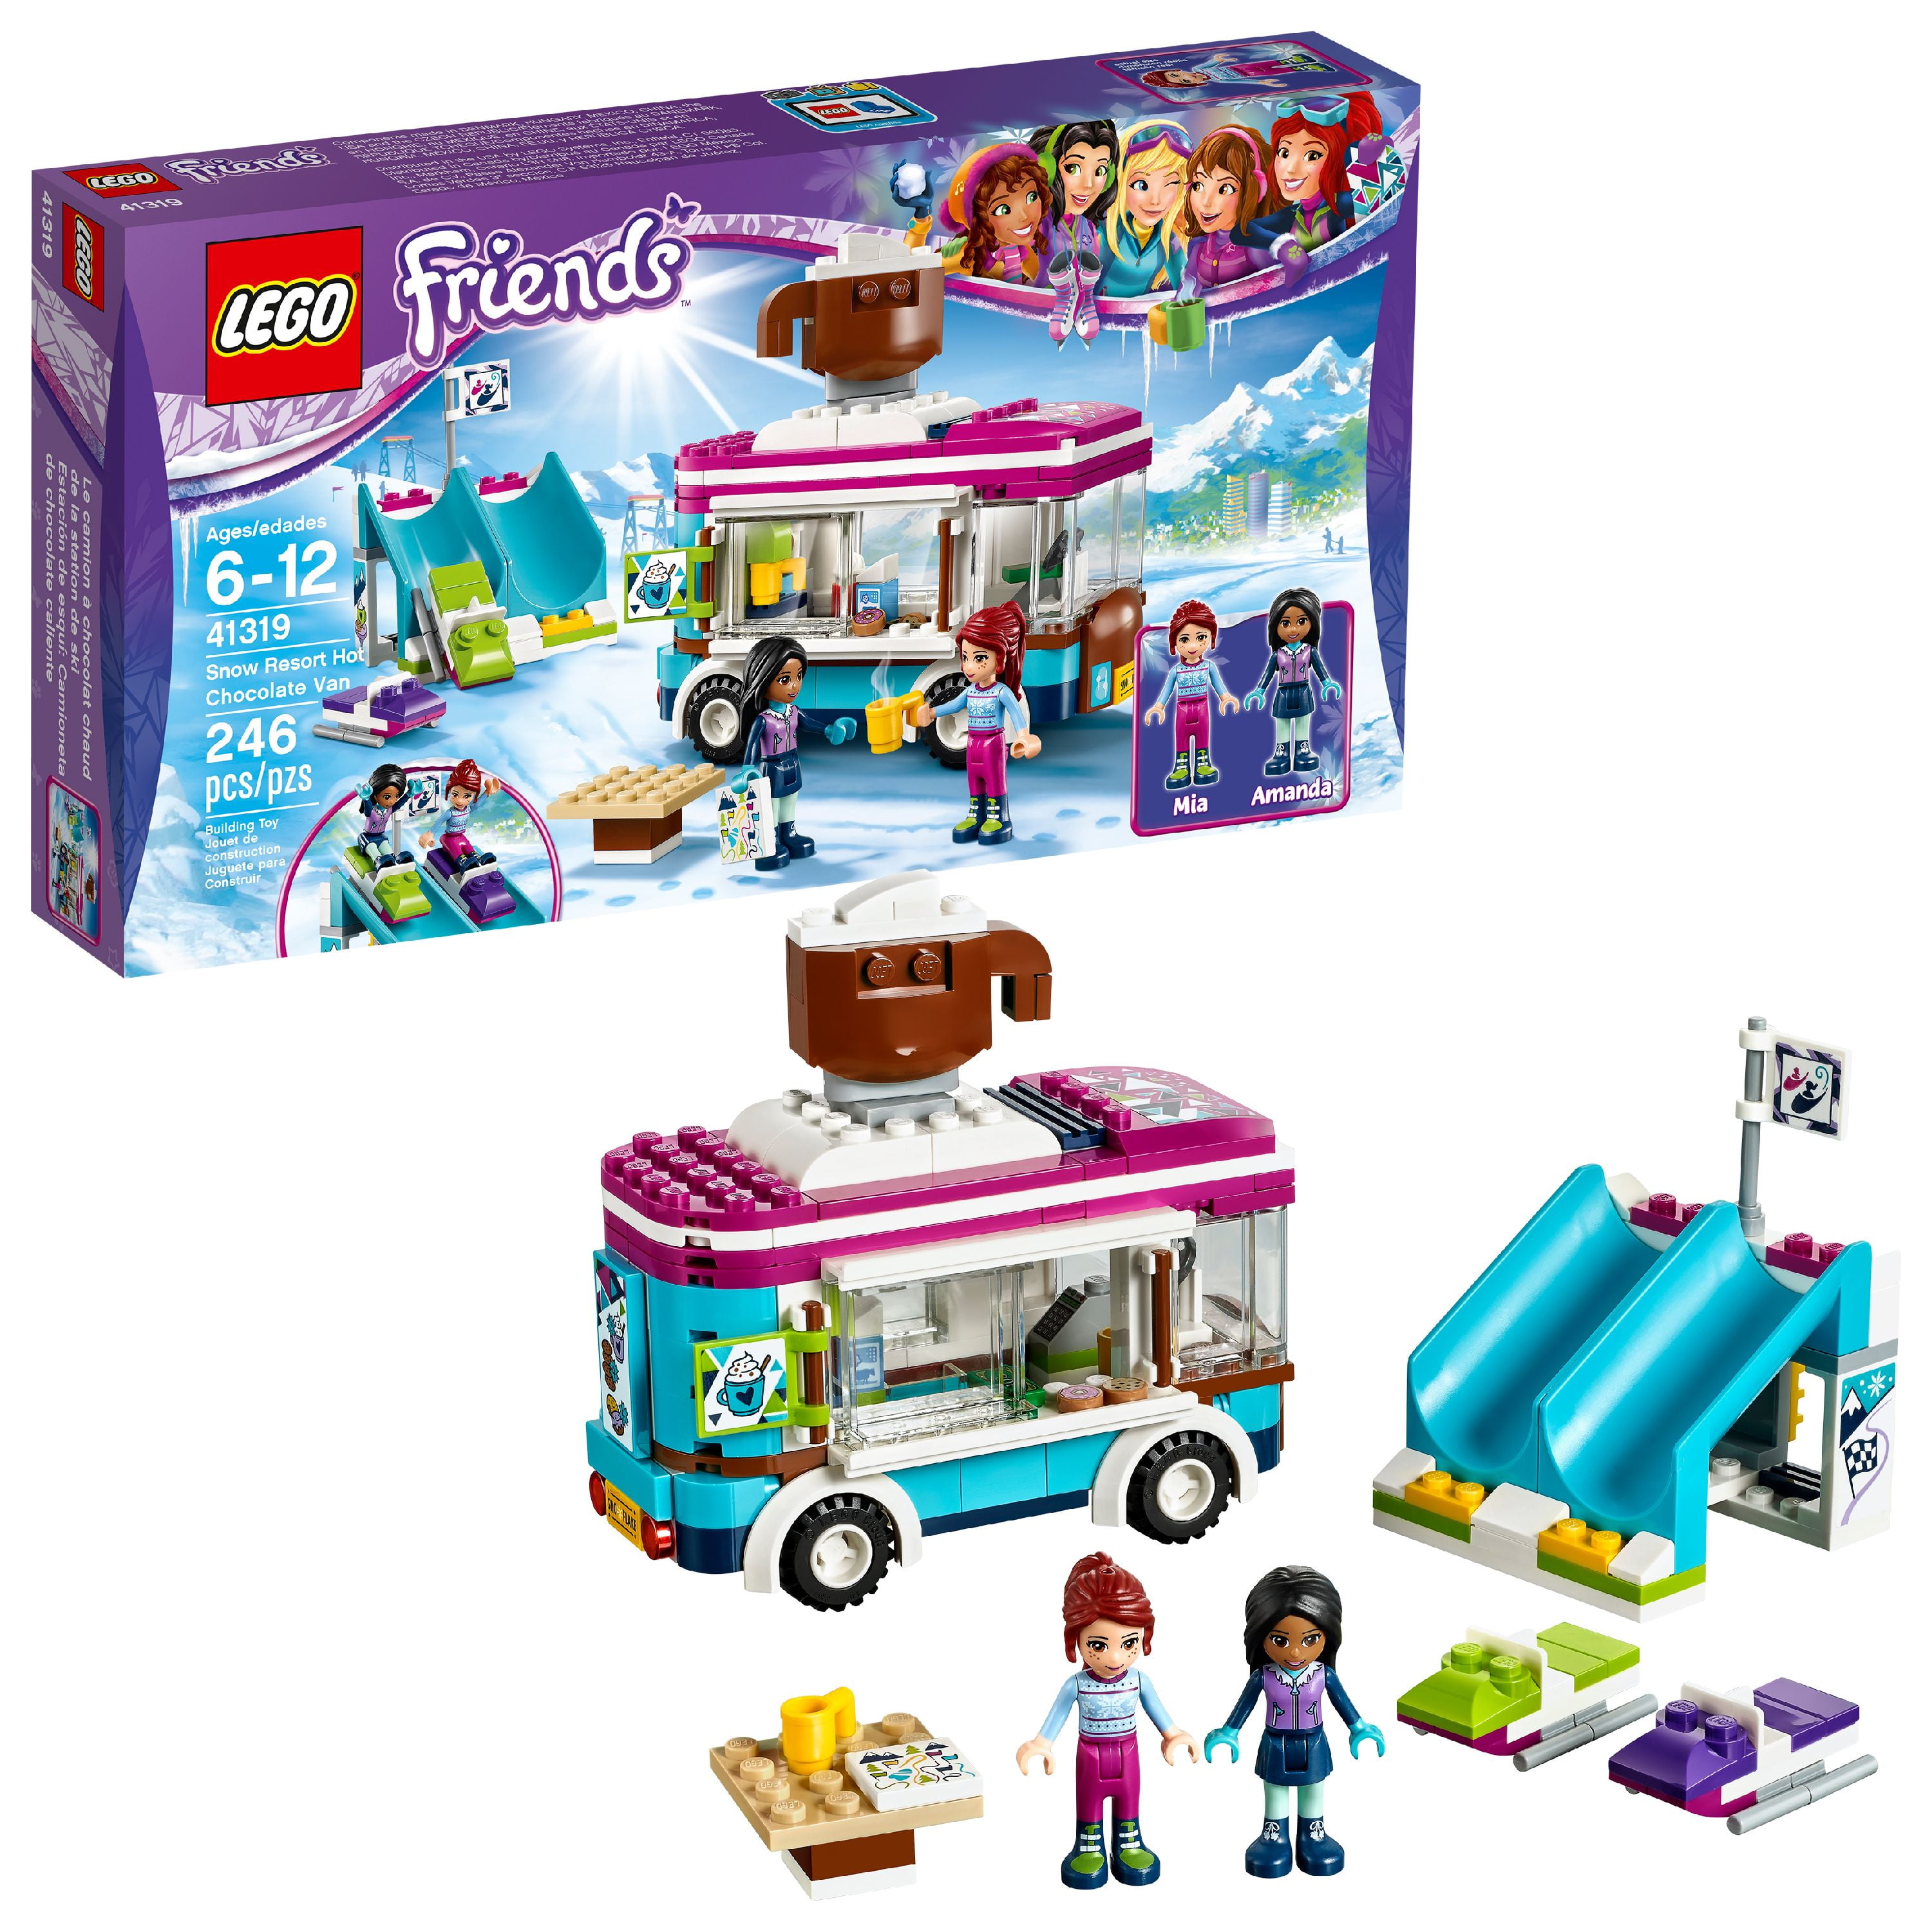 mest voksen Jeg har en engelskundervisning LEGO Friends Snow Resort Hot Chocolate Van 41319 (246 Pieces) - Walmart.com